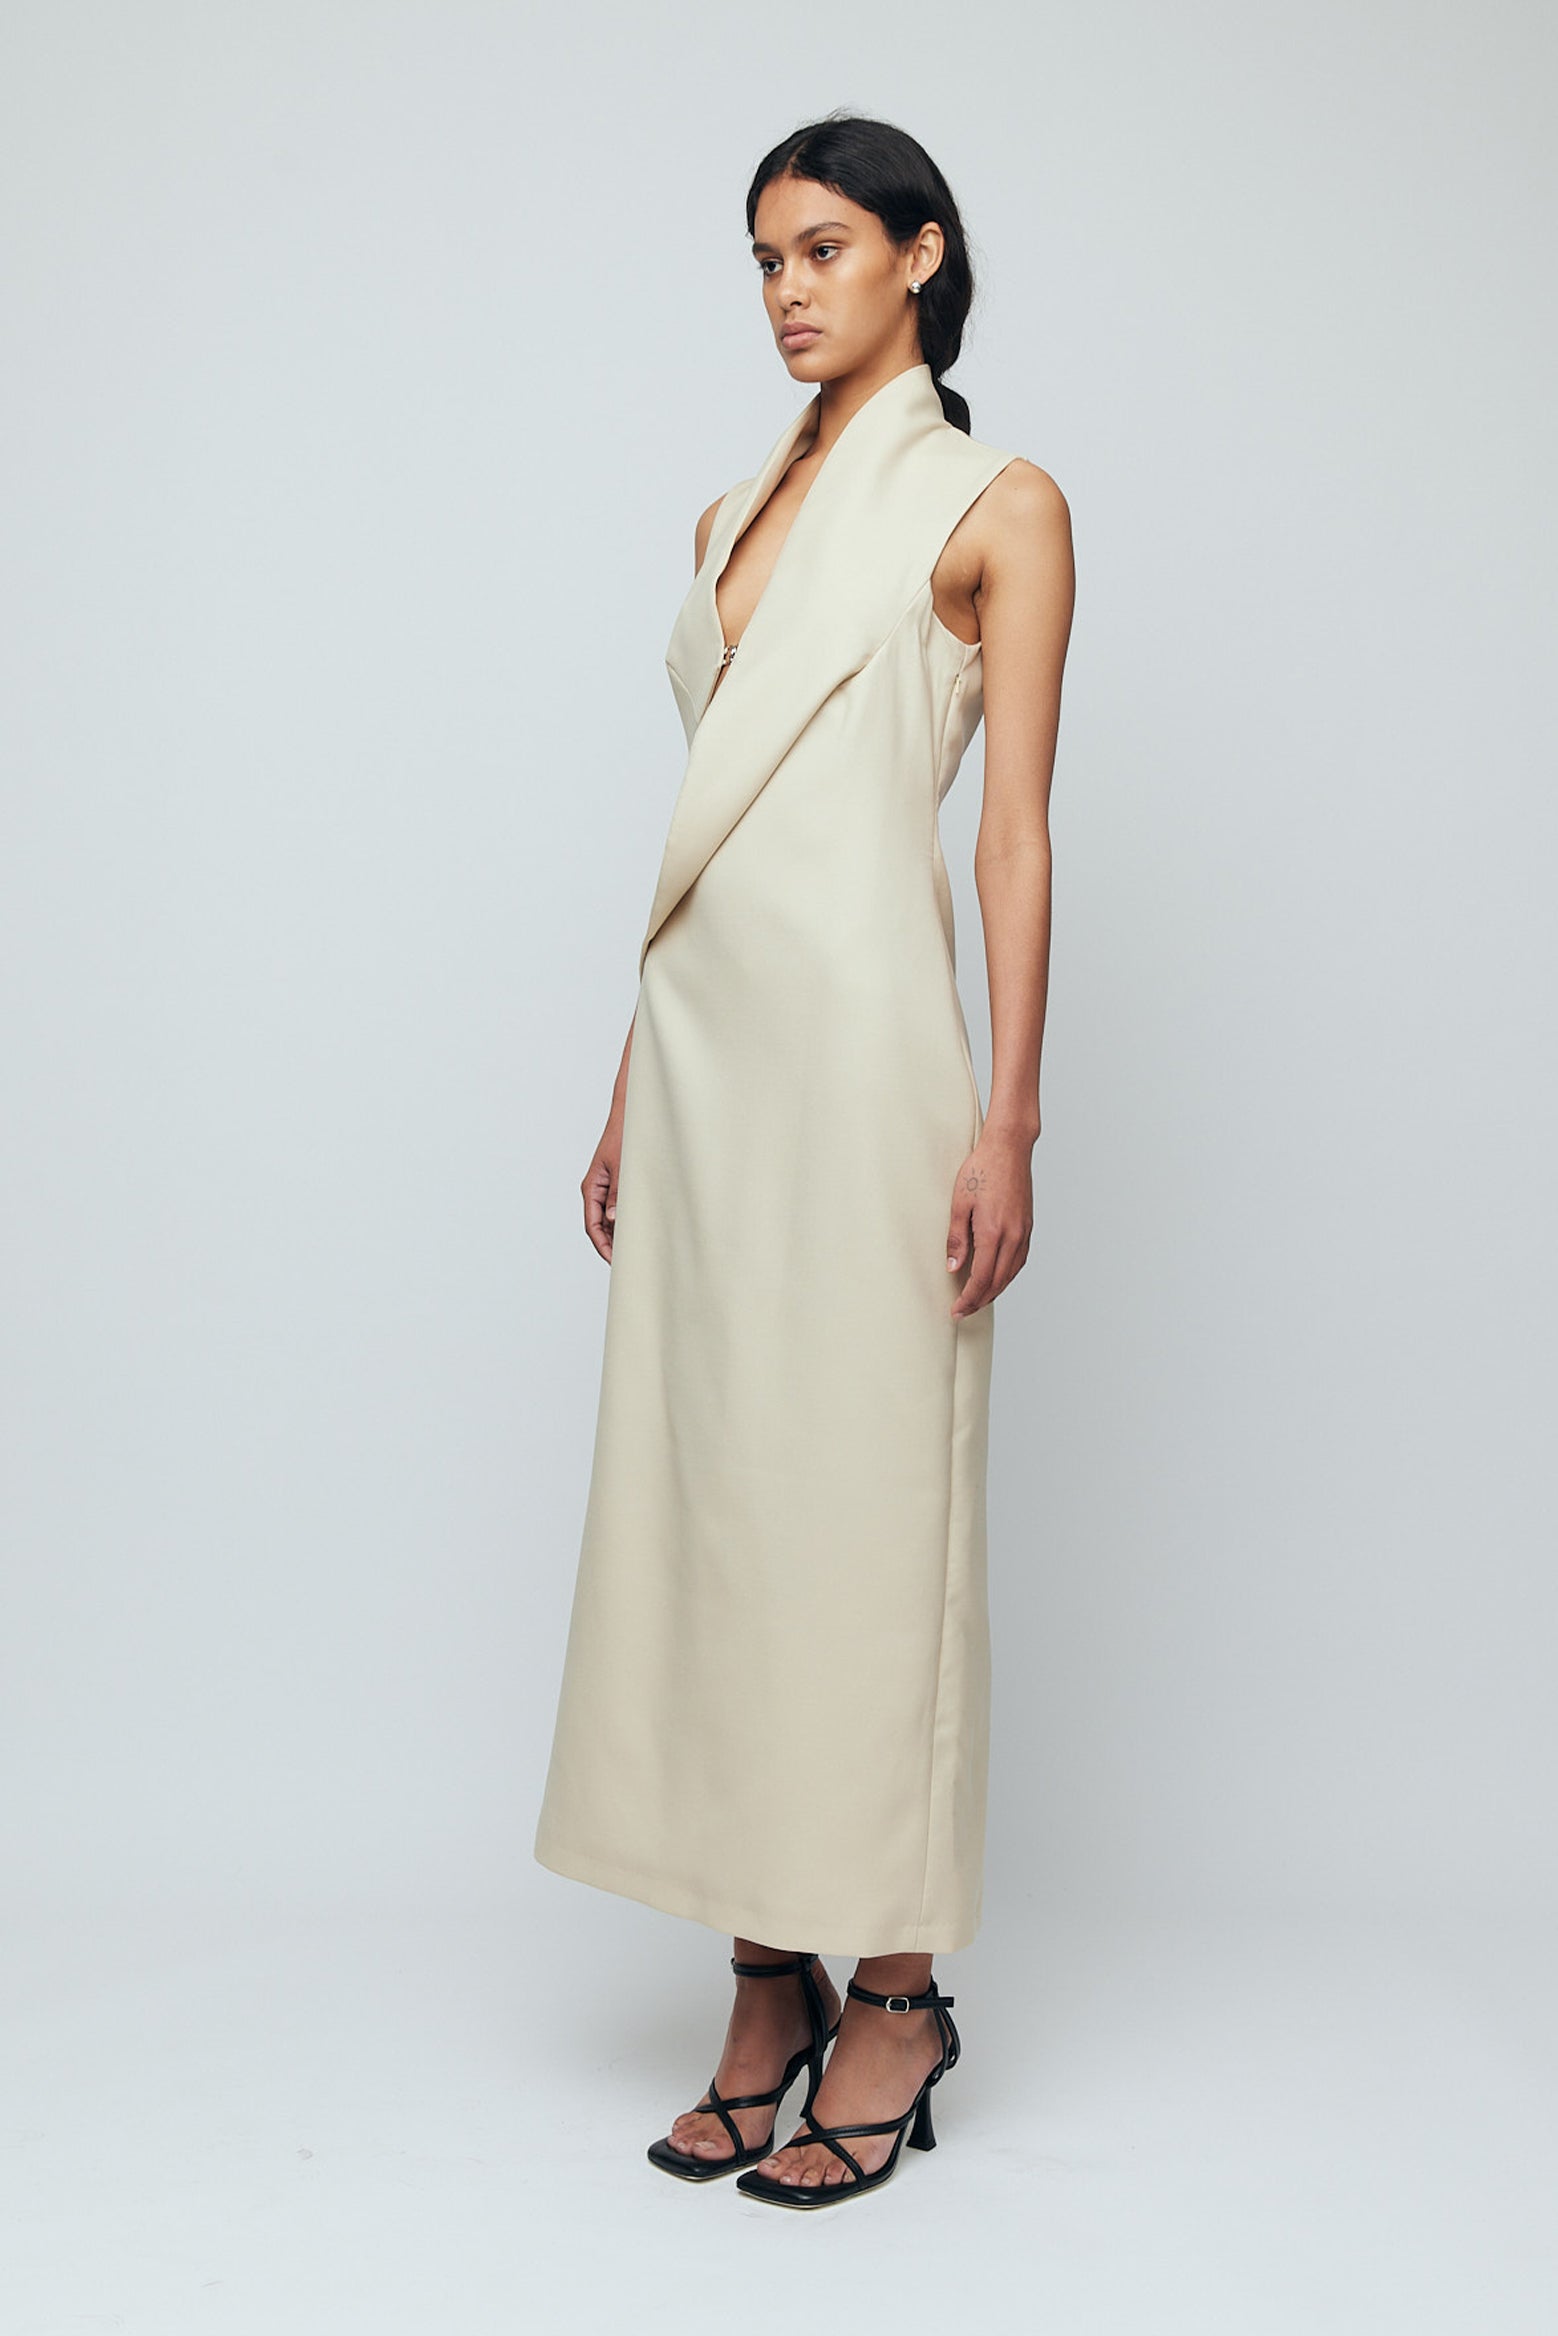 Wynn Hamlyn Harry Dress in Sand available at The New Trend Australia.